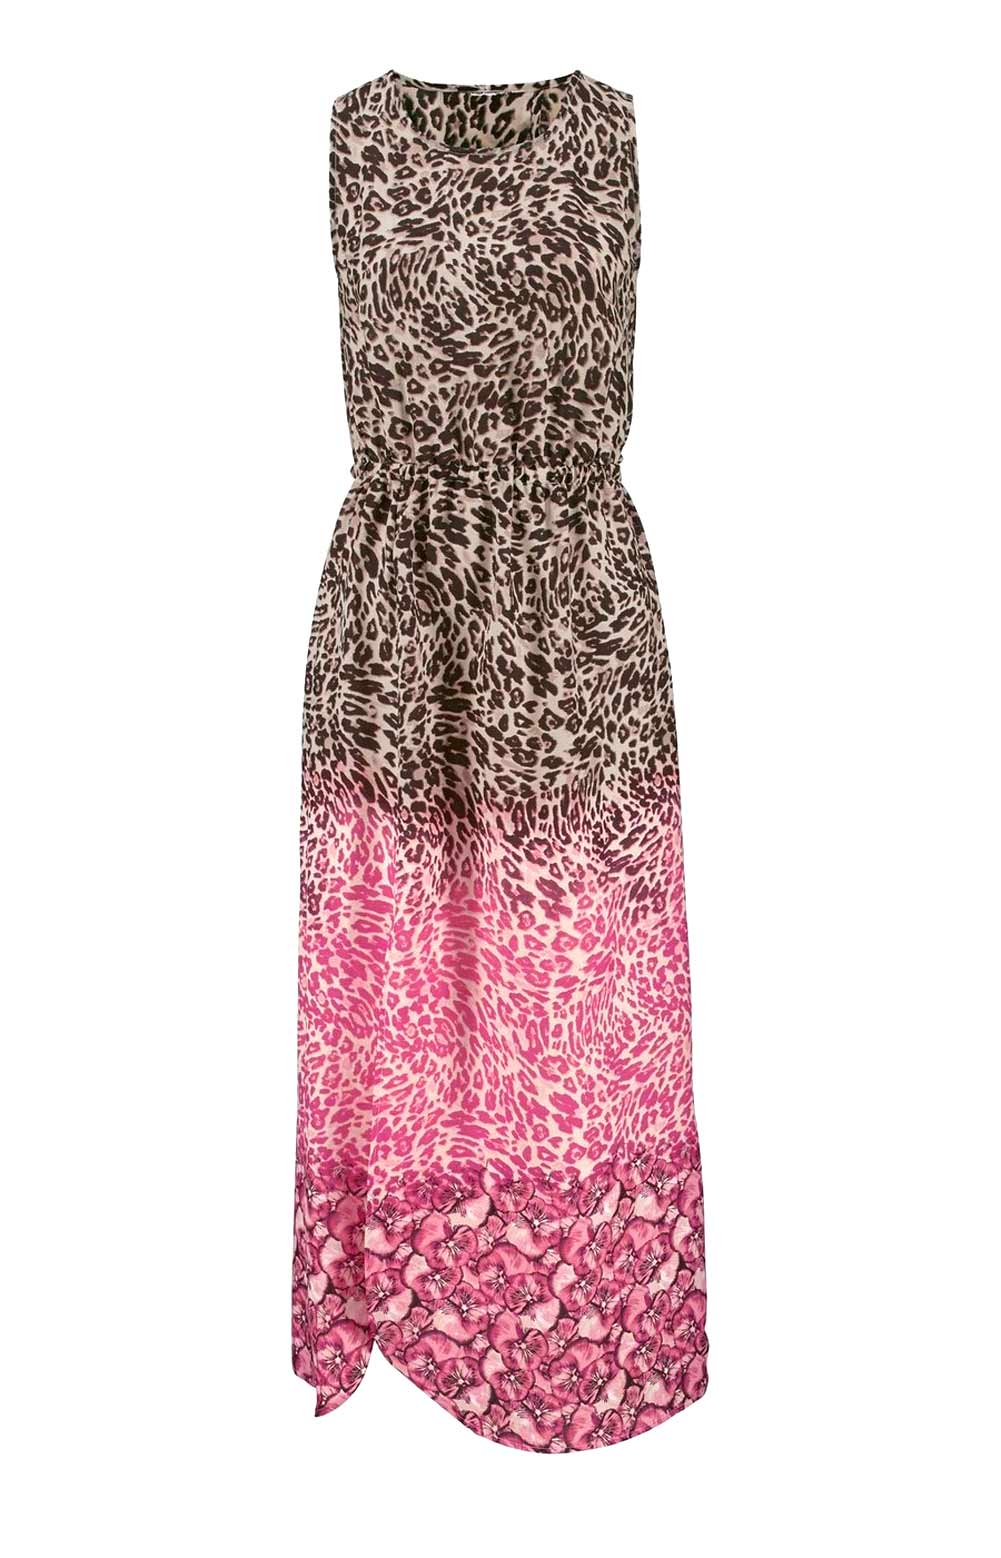 Vivance Collection Damen Kleid, sand-taupe-pink